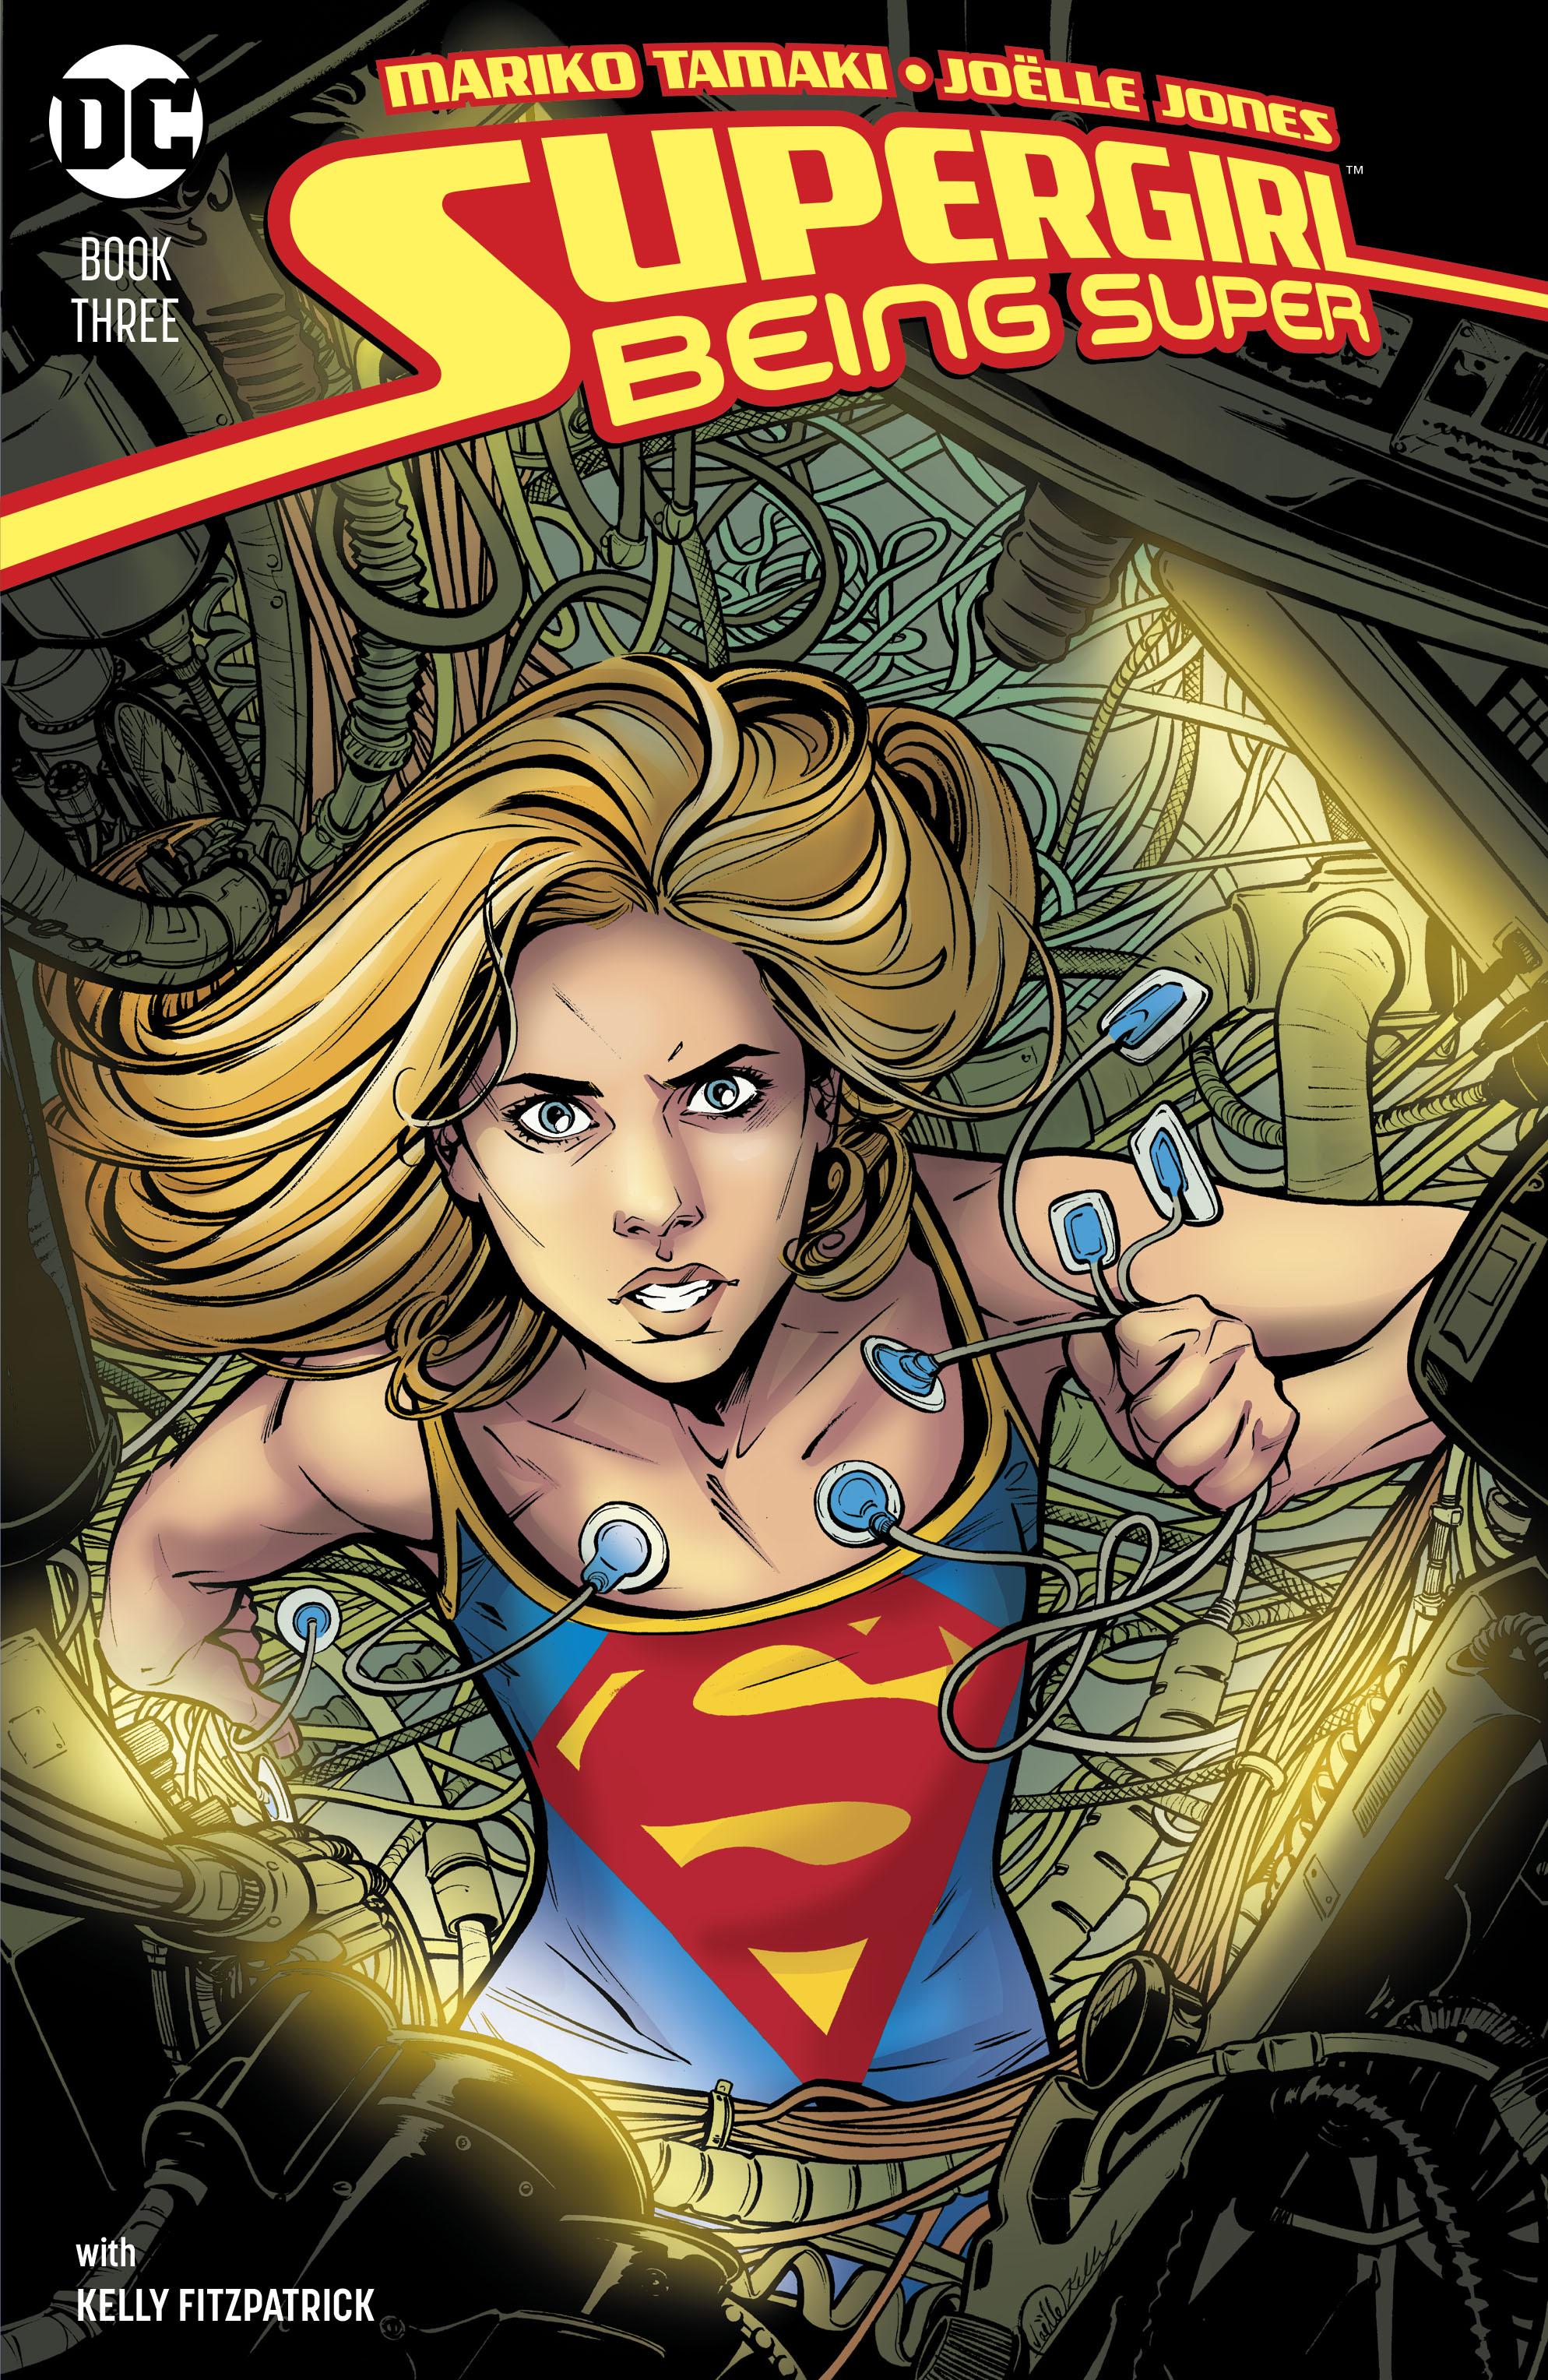 Supergirl: Being Super Vol. 1 #3